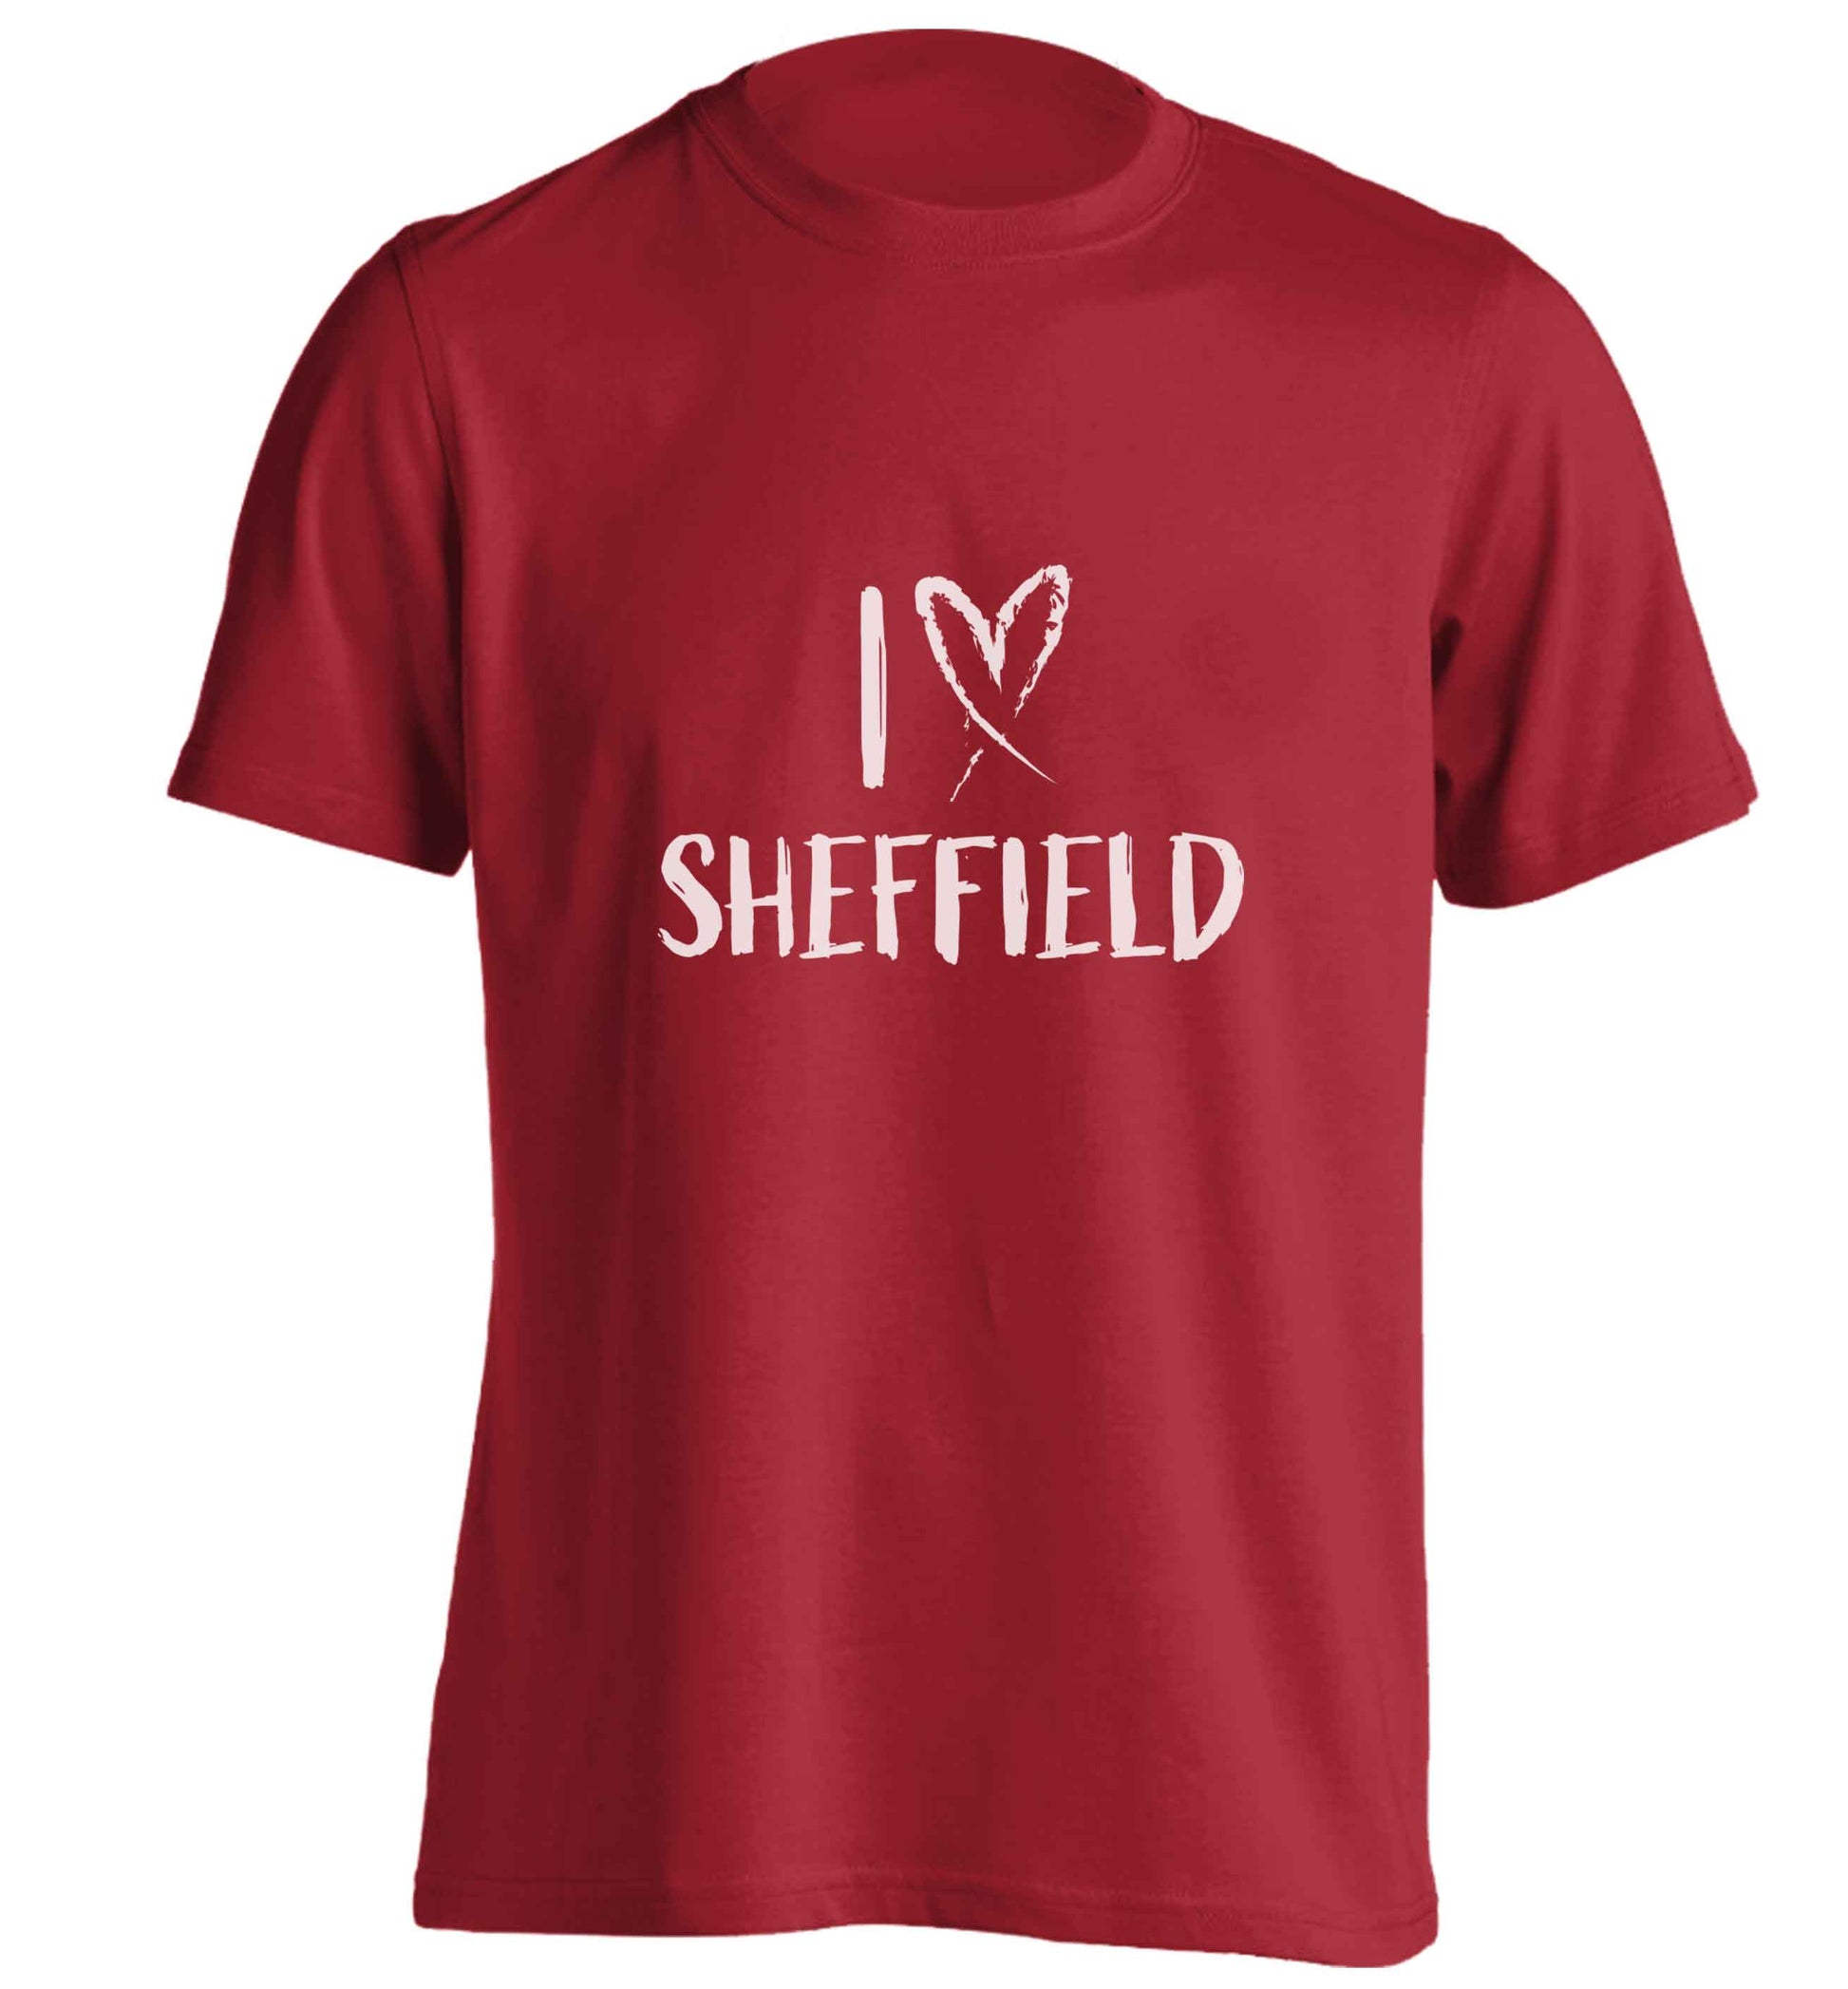 I love Sheffield adults unisex red Tshirt 2XL